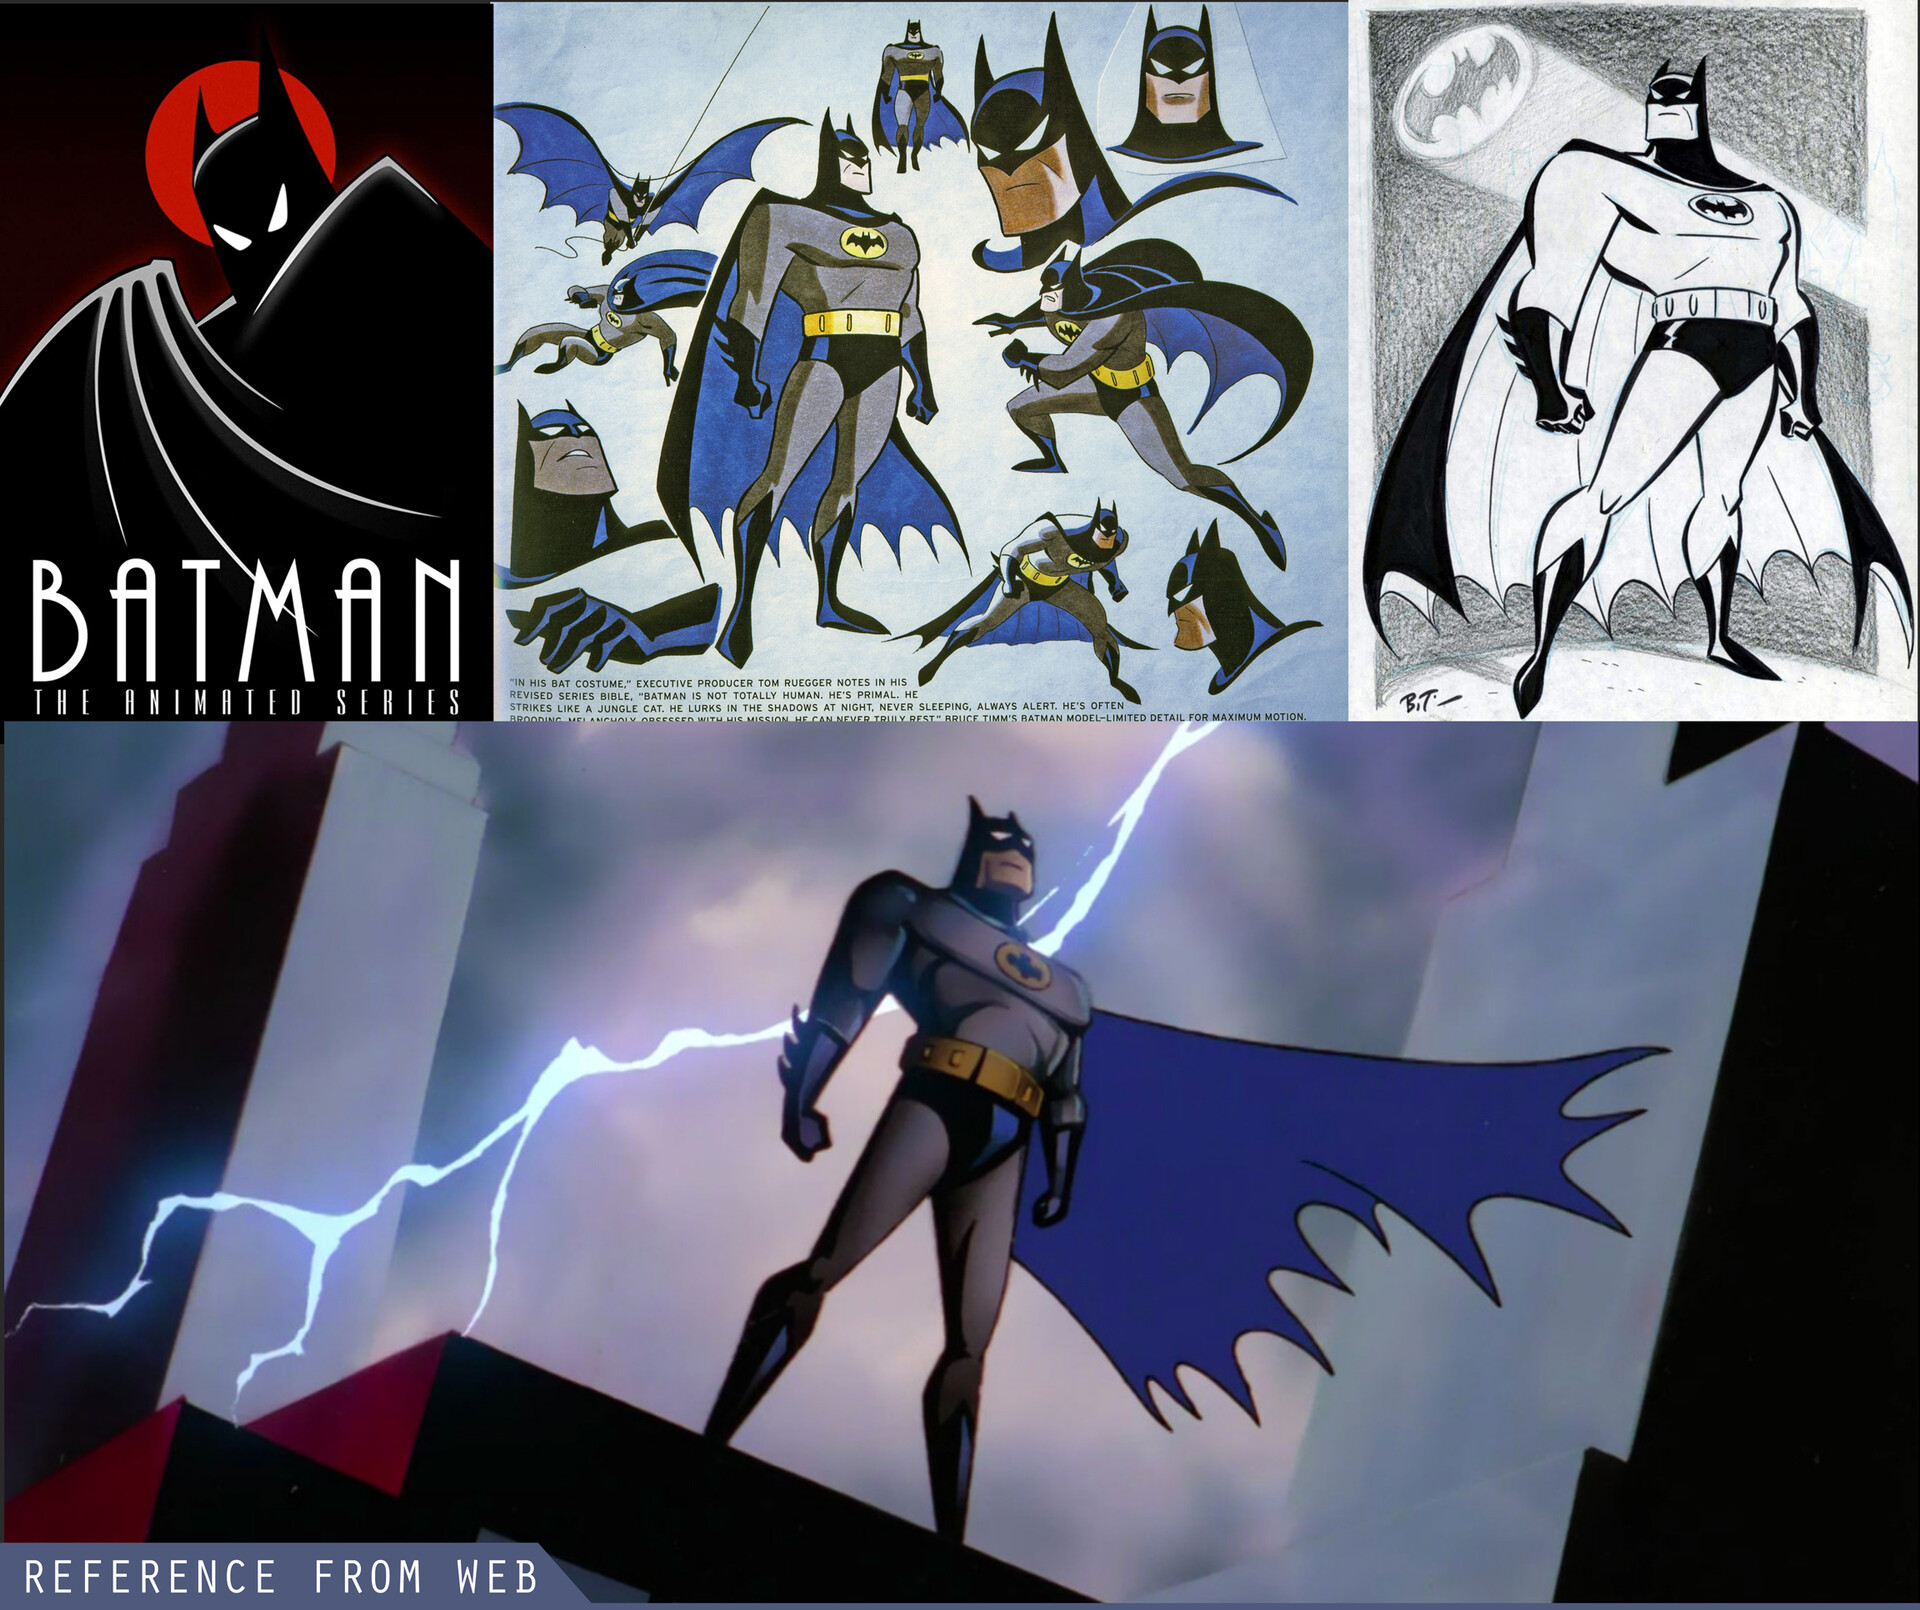 ArtStation - Batman: The Animated Series